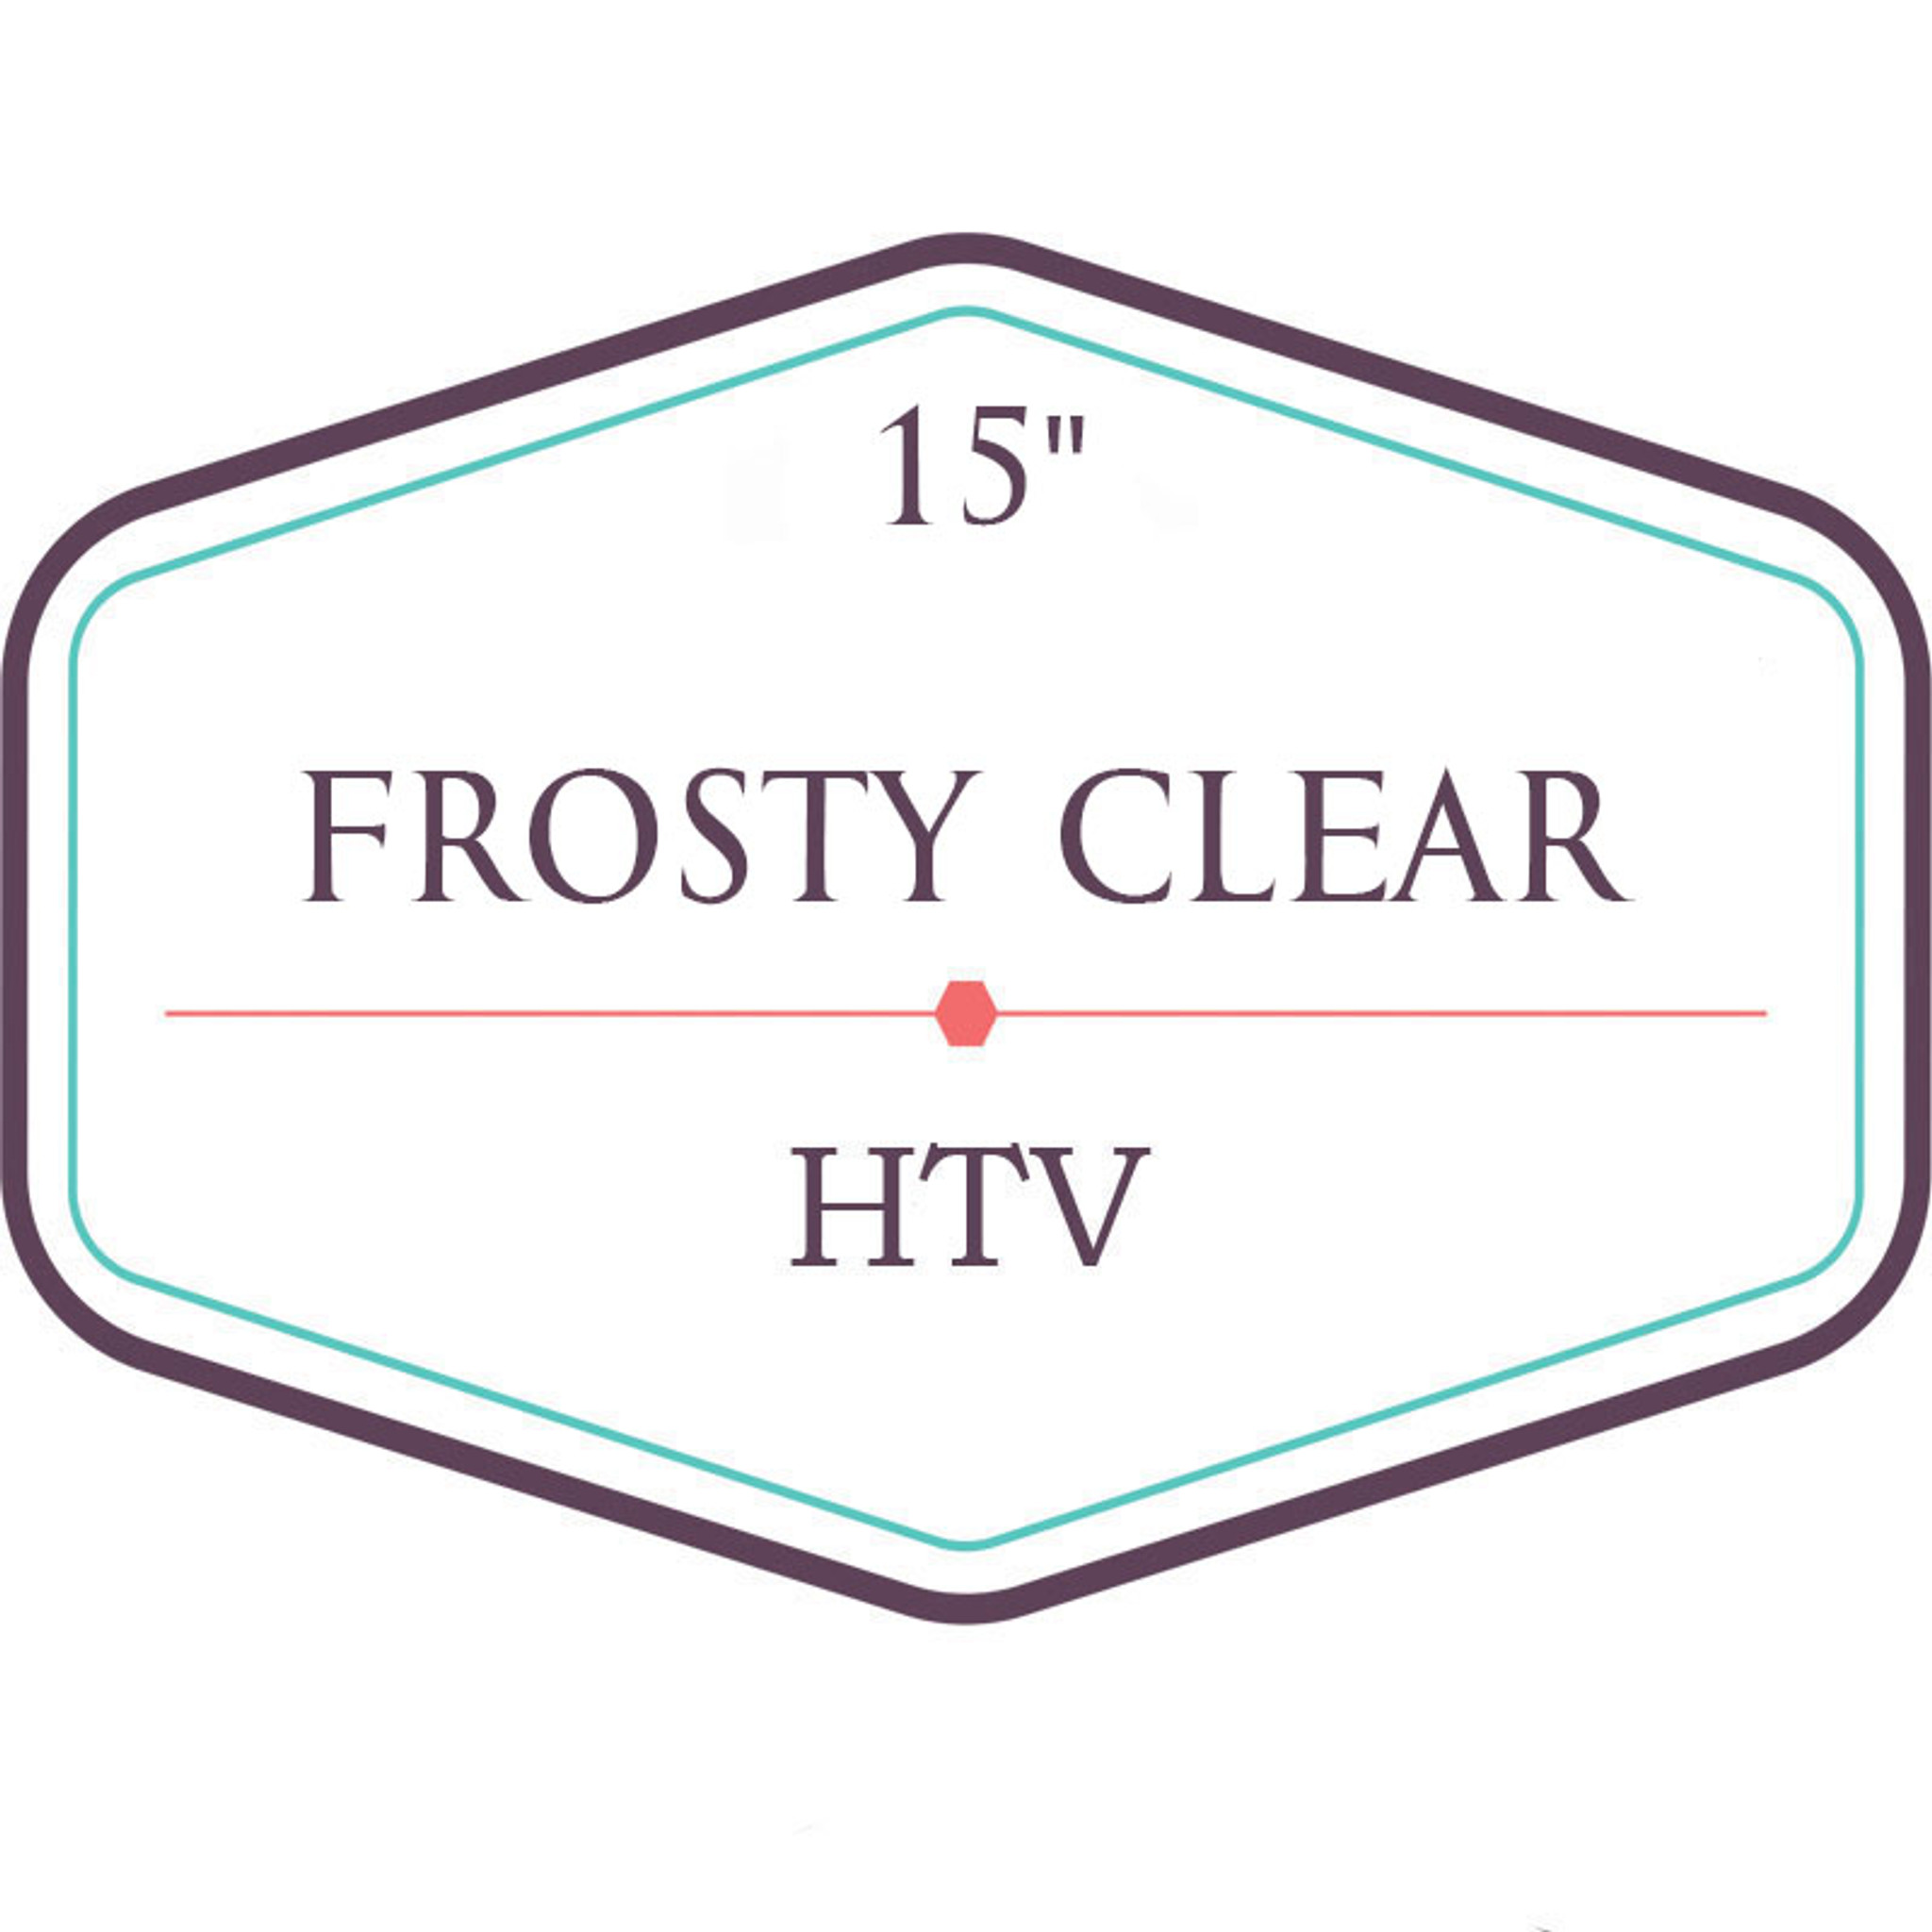 Frosty Clear